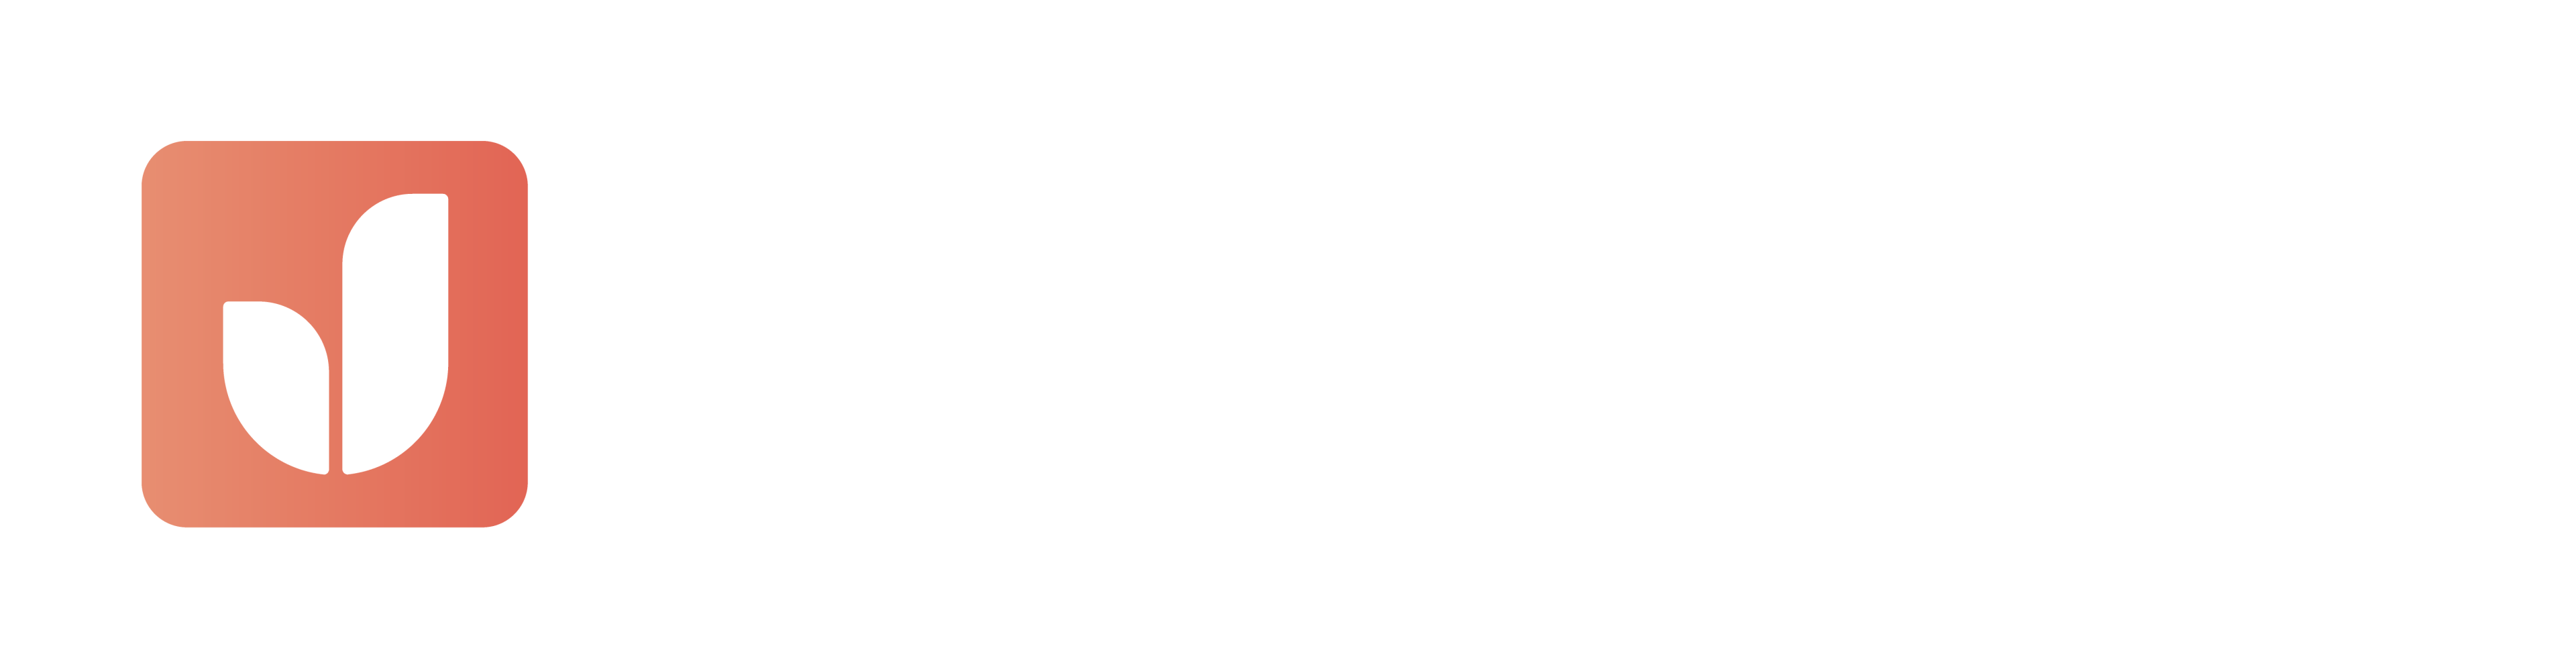 Legal Desk - logo